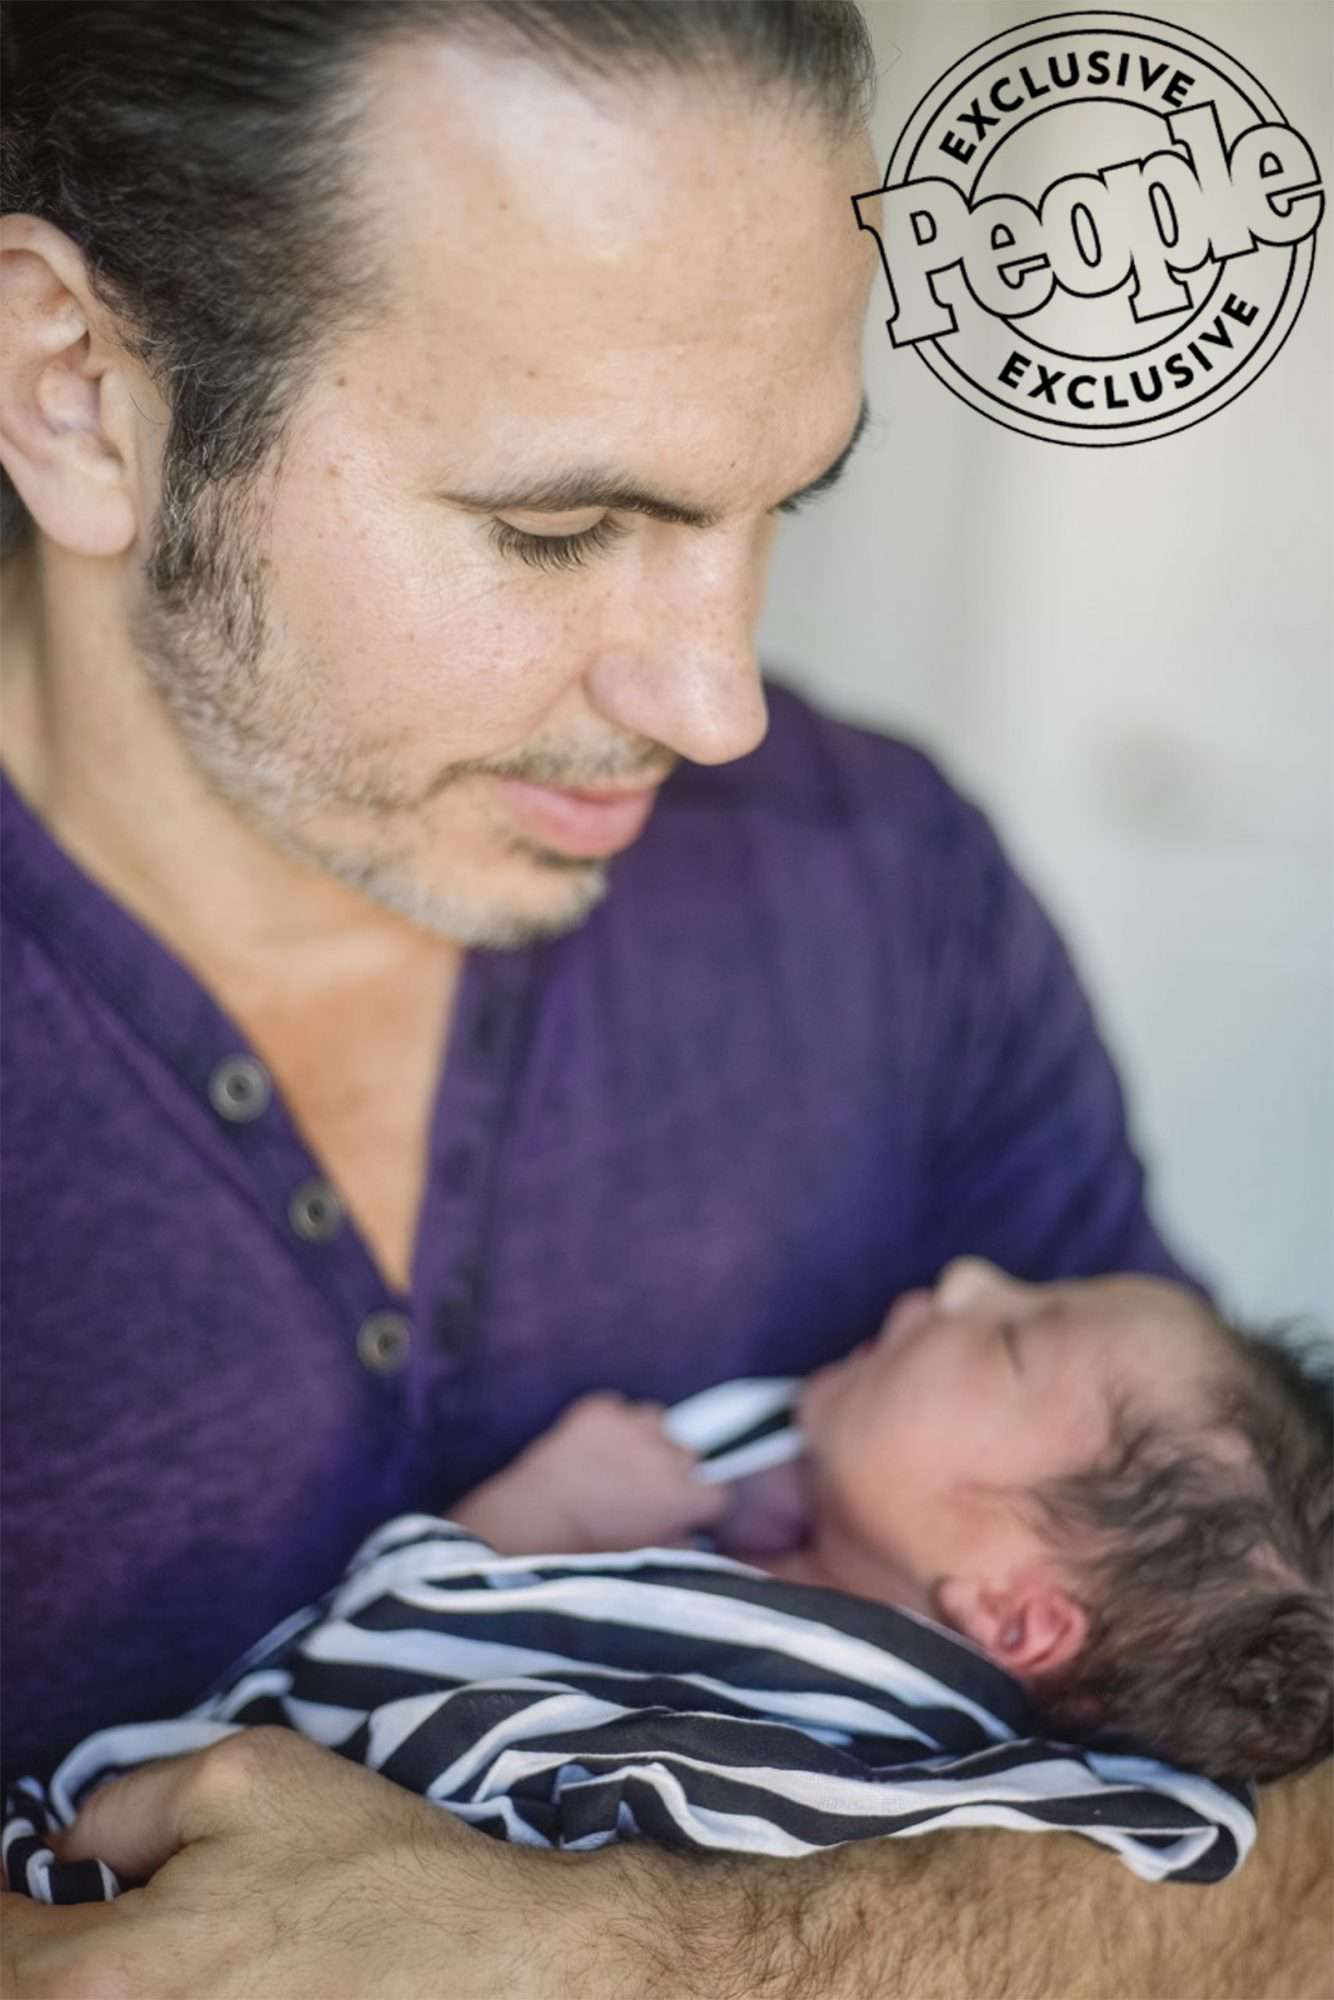 Matt Hardy wife baby photos